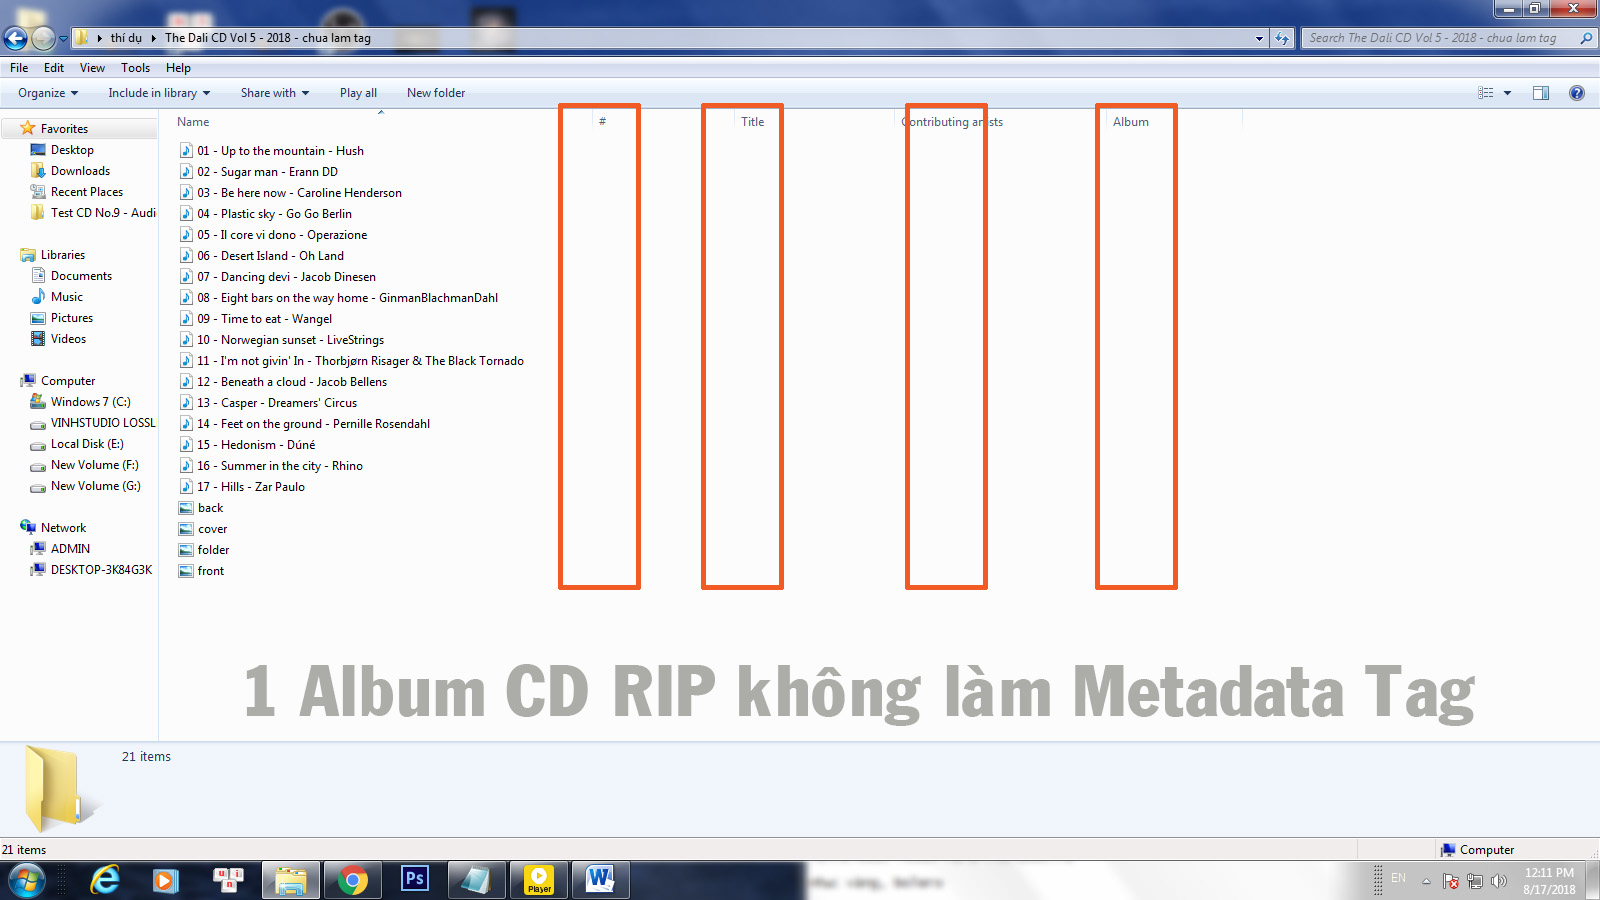 album cd rip khong co metadata tag